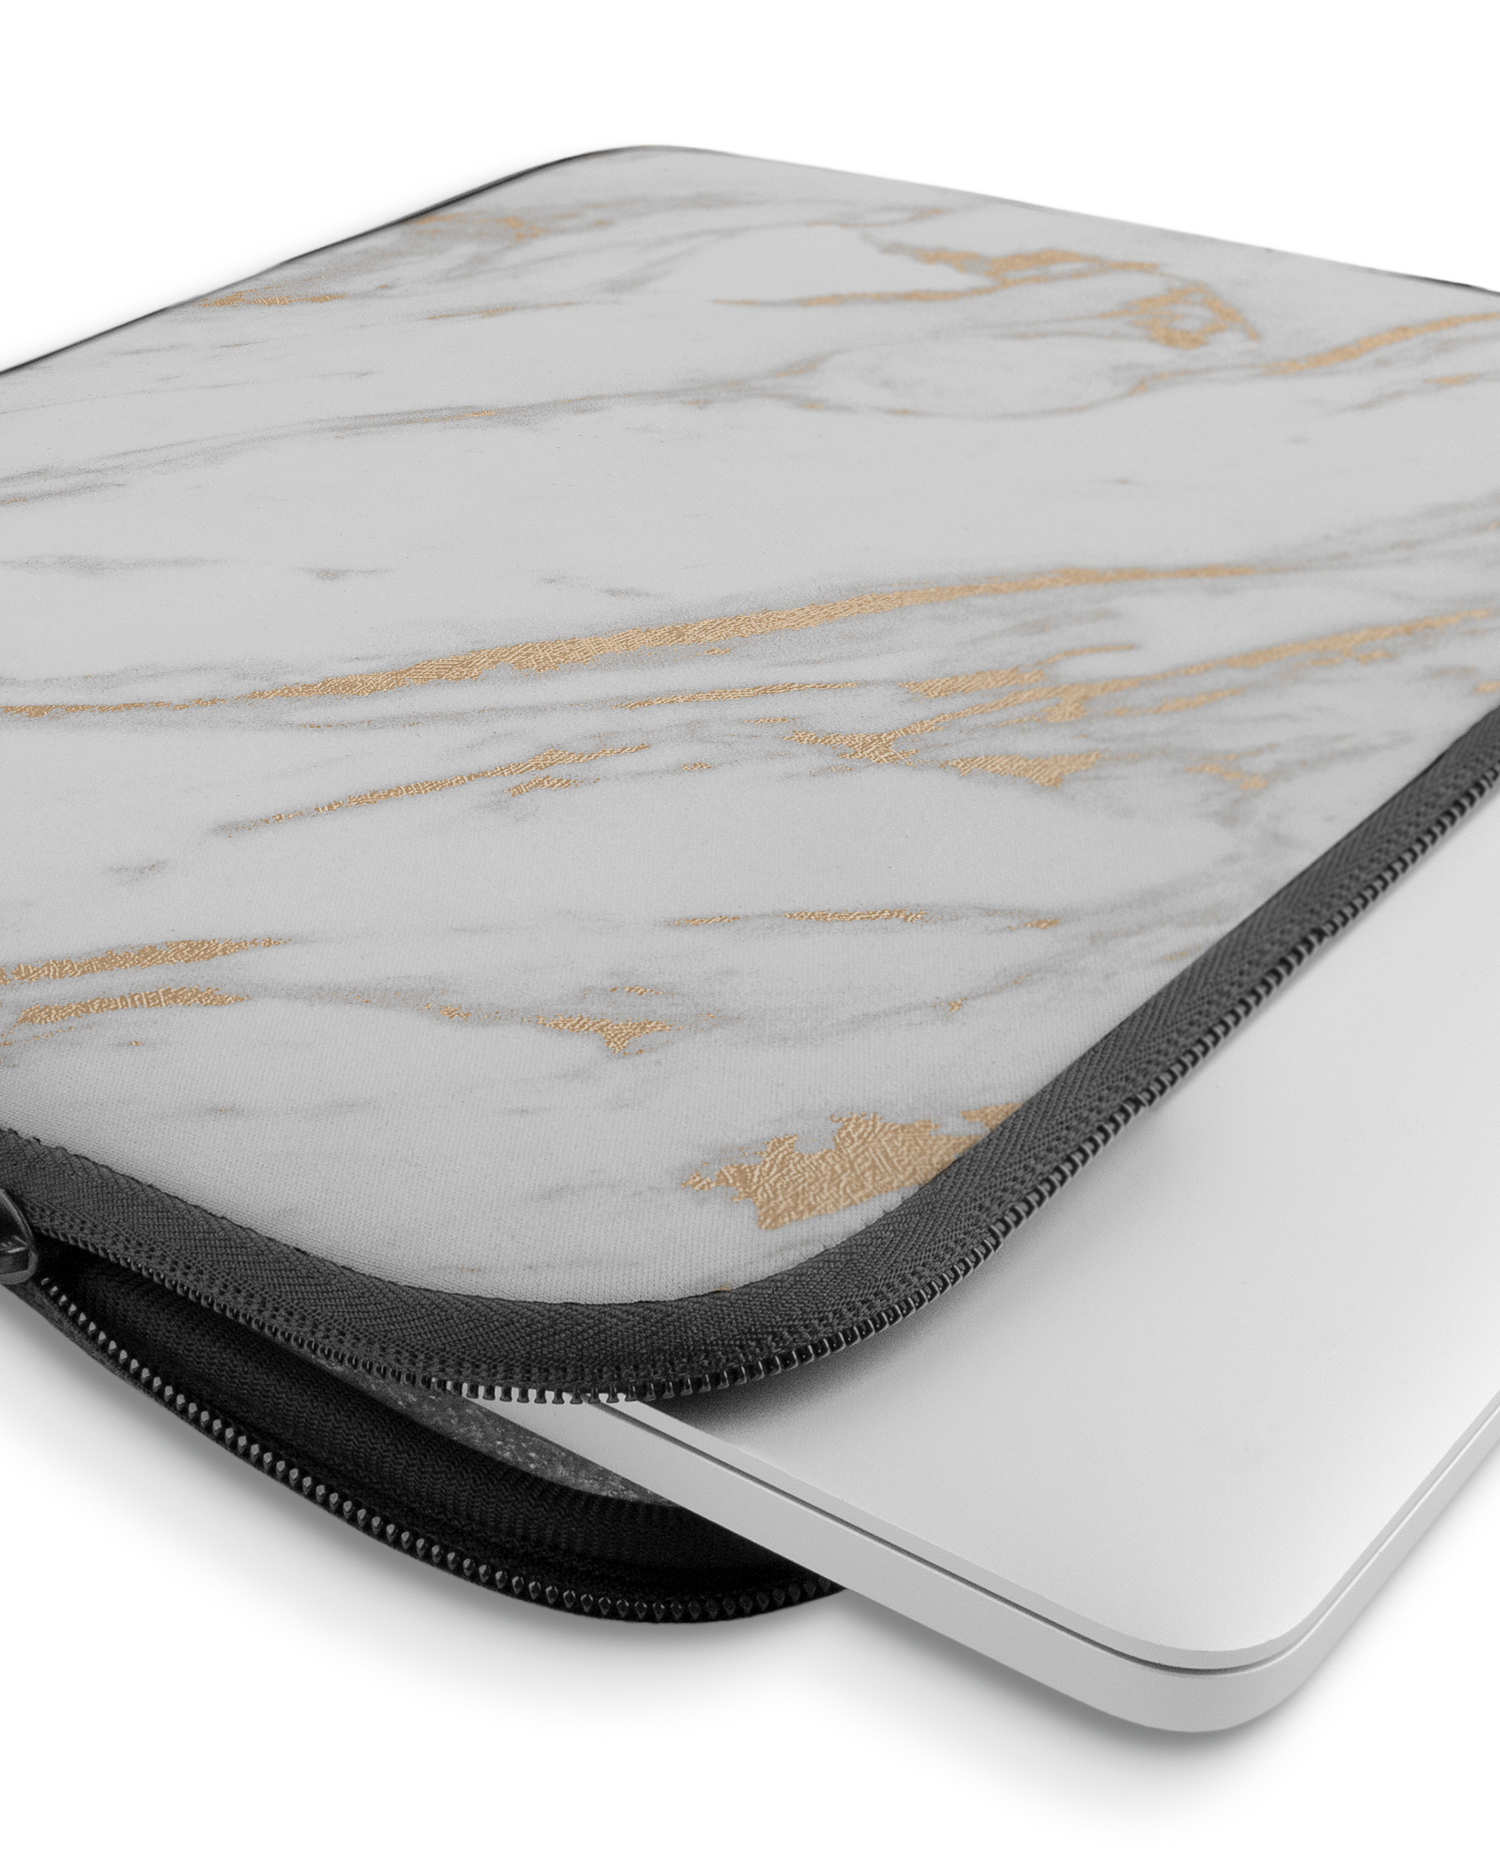 Gold Marble Elegance Laptophülle 15 Zoll mit Gerät im Inneren